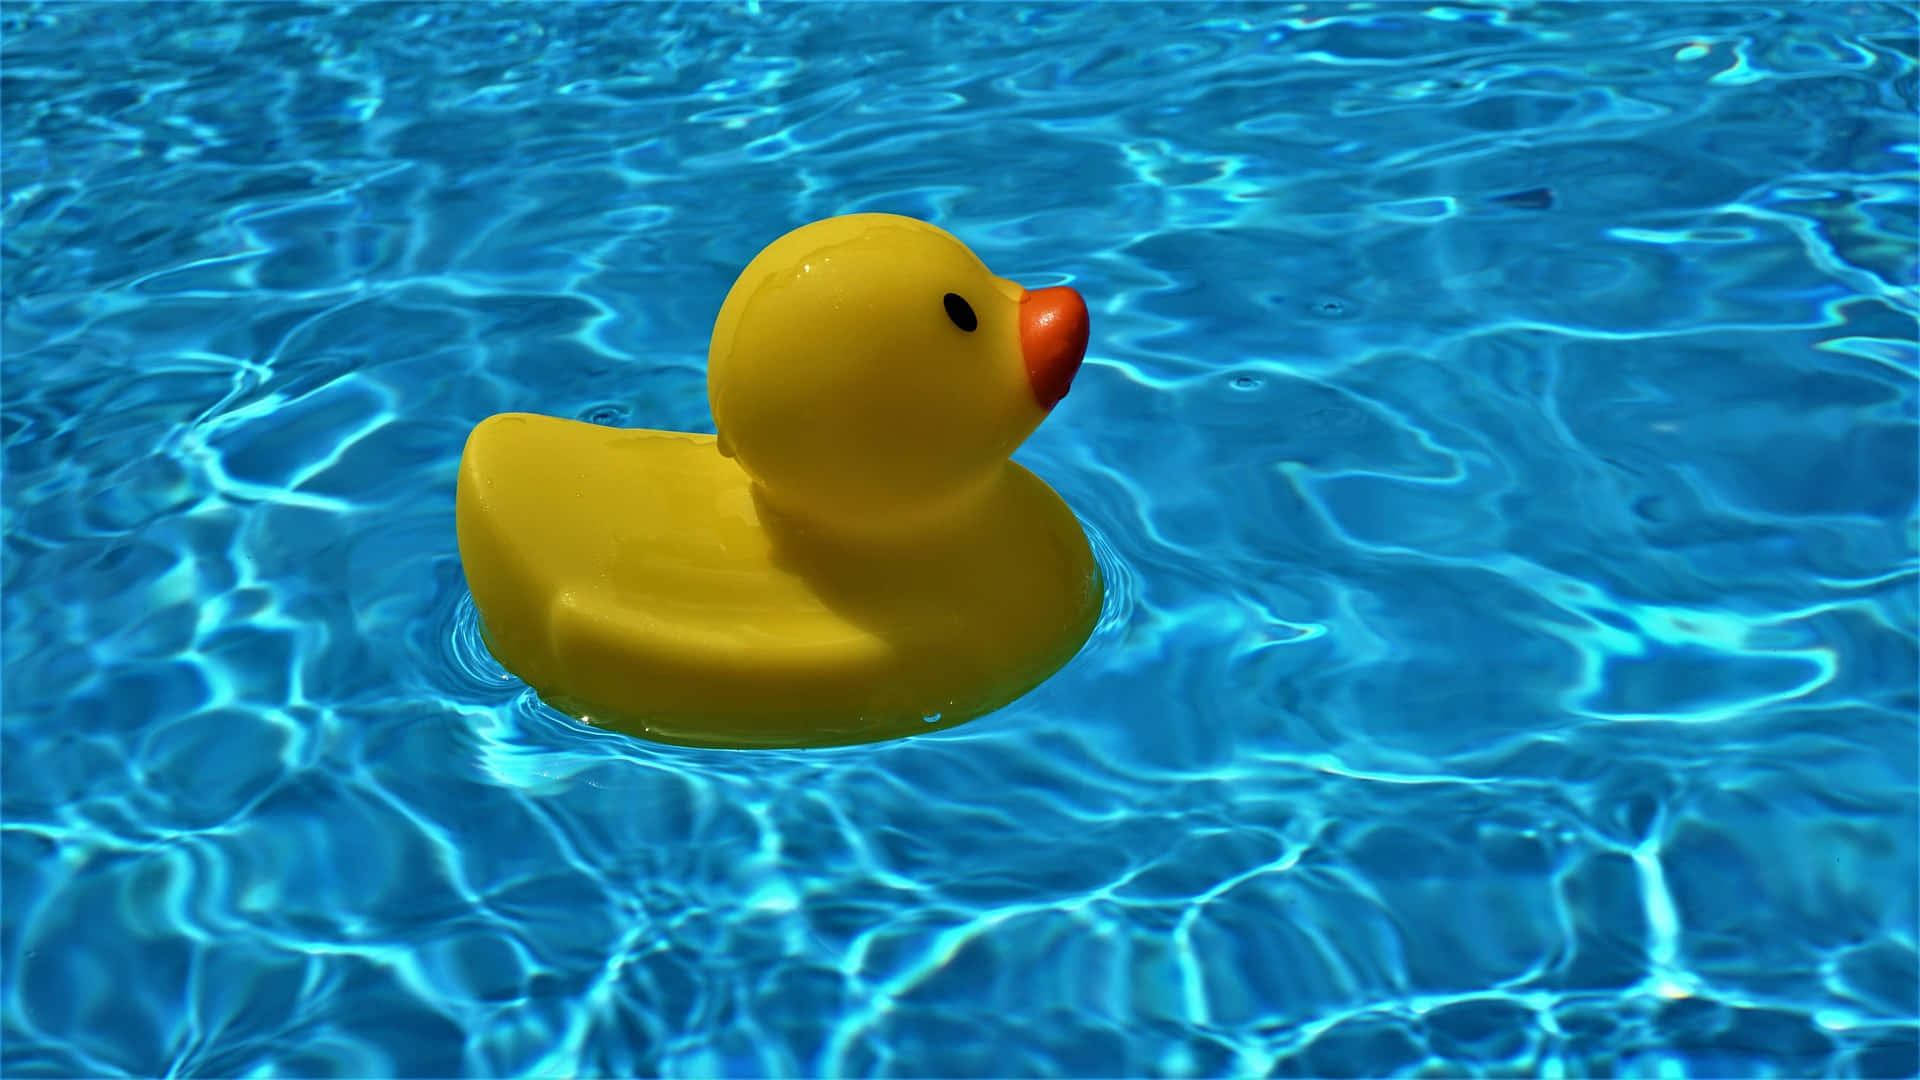 Yellow Rubber Ducky Floatingin Pool.jpg Wallpaper